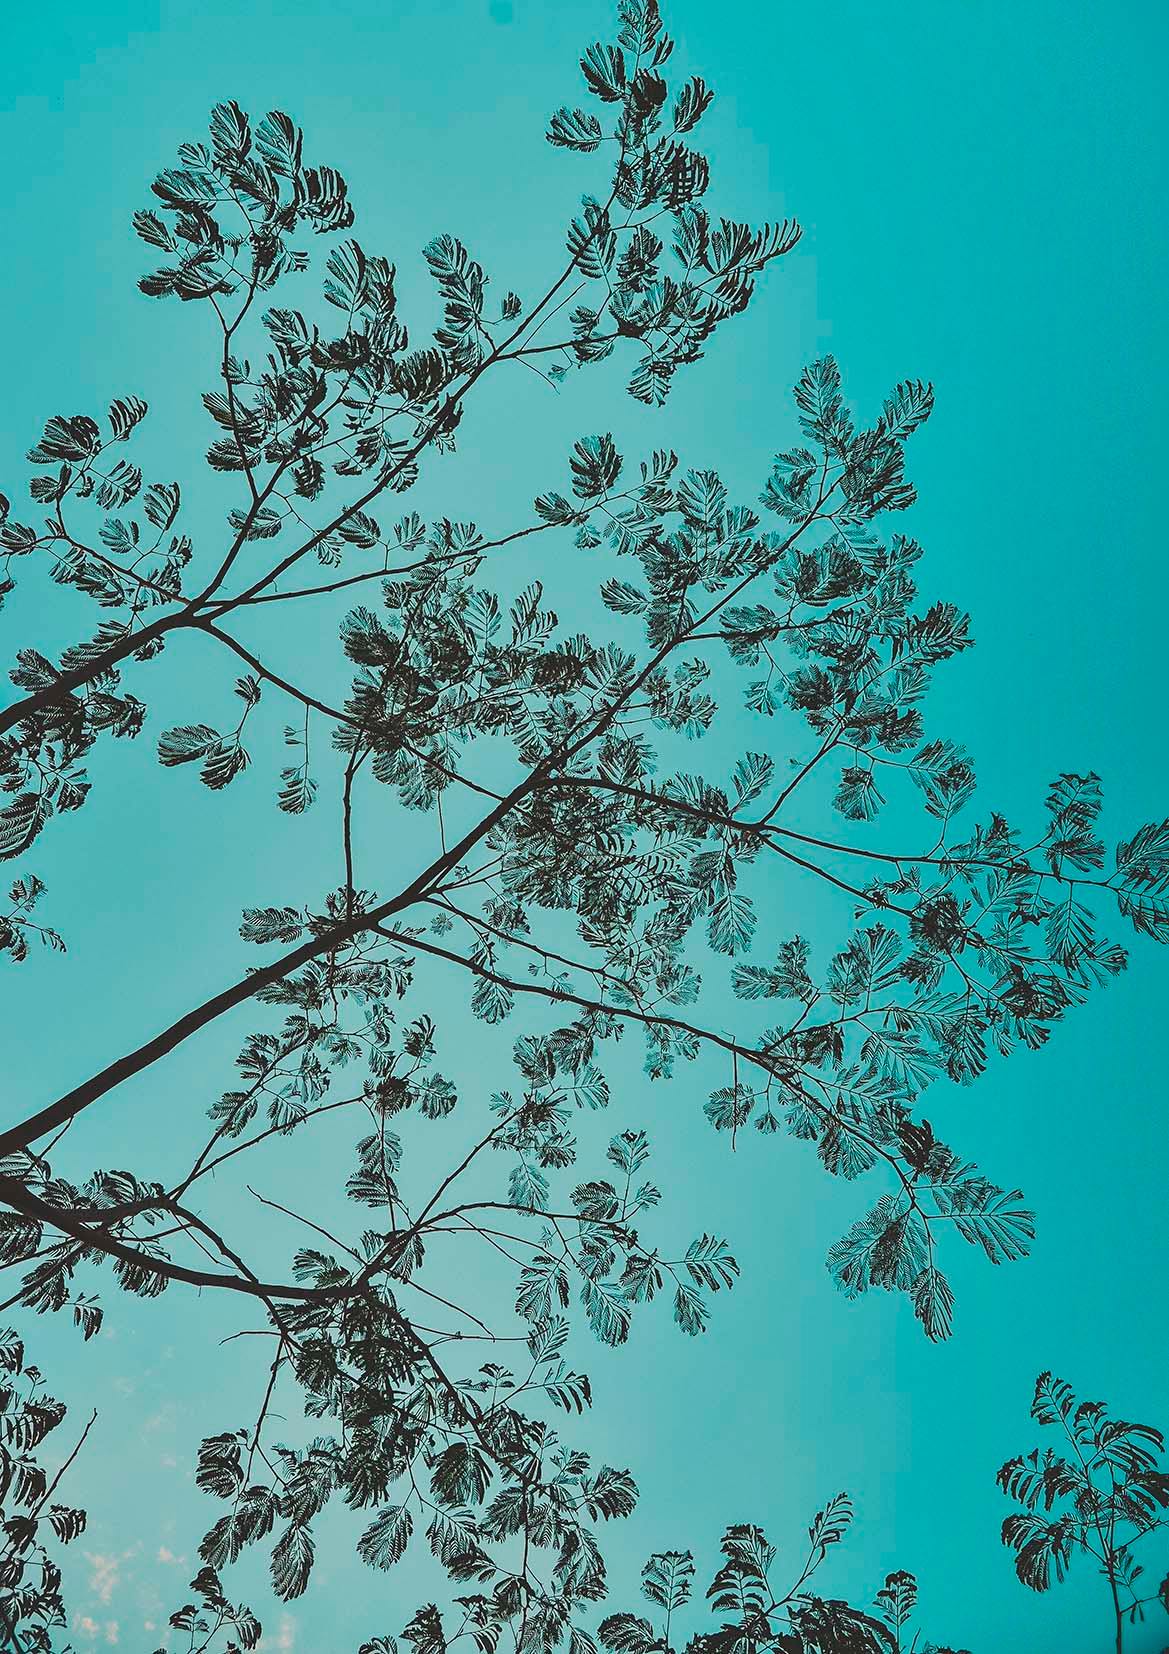 LEAVES SILHOUETTE PRINT: Blue Sky Photo Art - Pimlico Prints